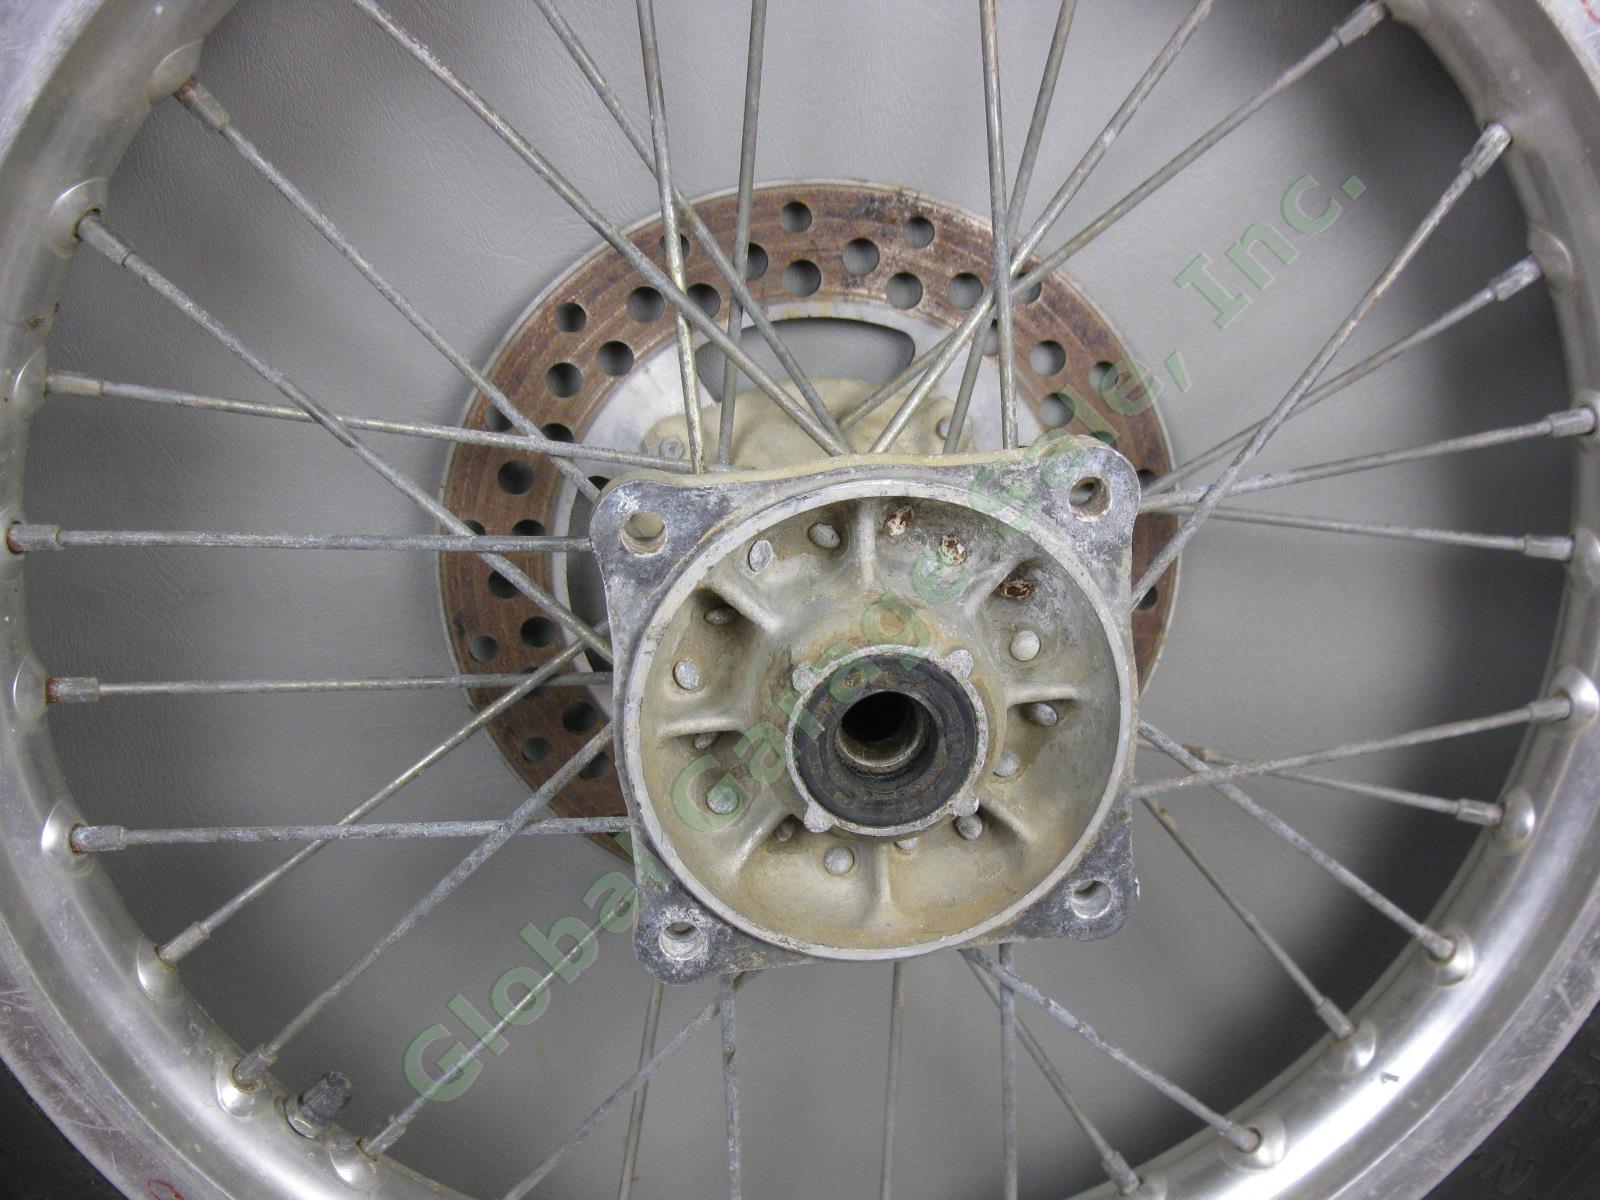 Talon Excel Takasago YZ85 16x1.85 Rear Wheel Rim Michelin Starcross 90/100 Tire 3